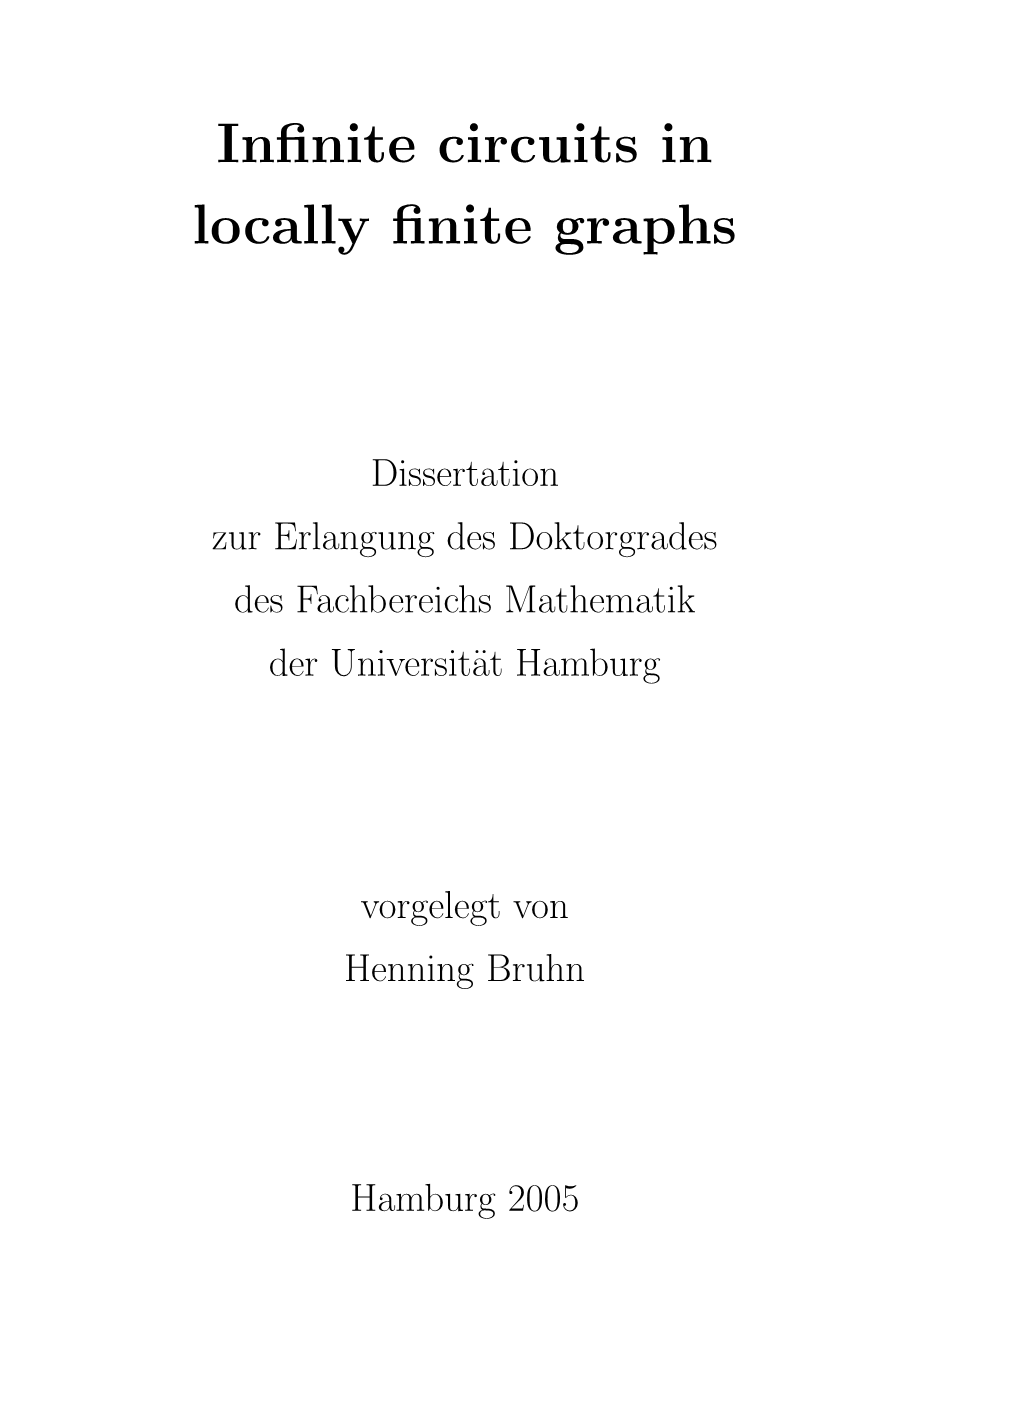 Infinite Circuits in Locally Finite Graphs